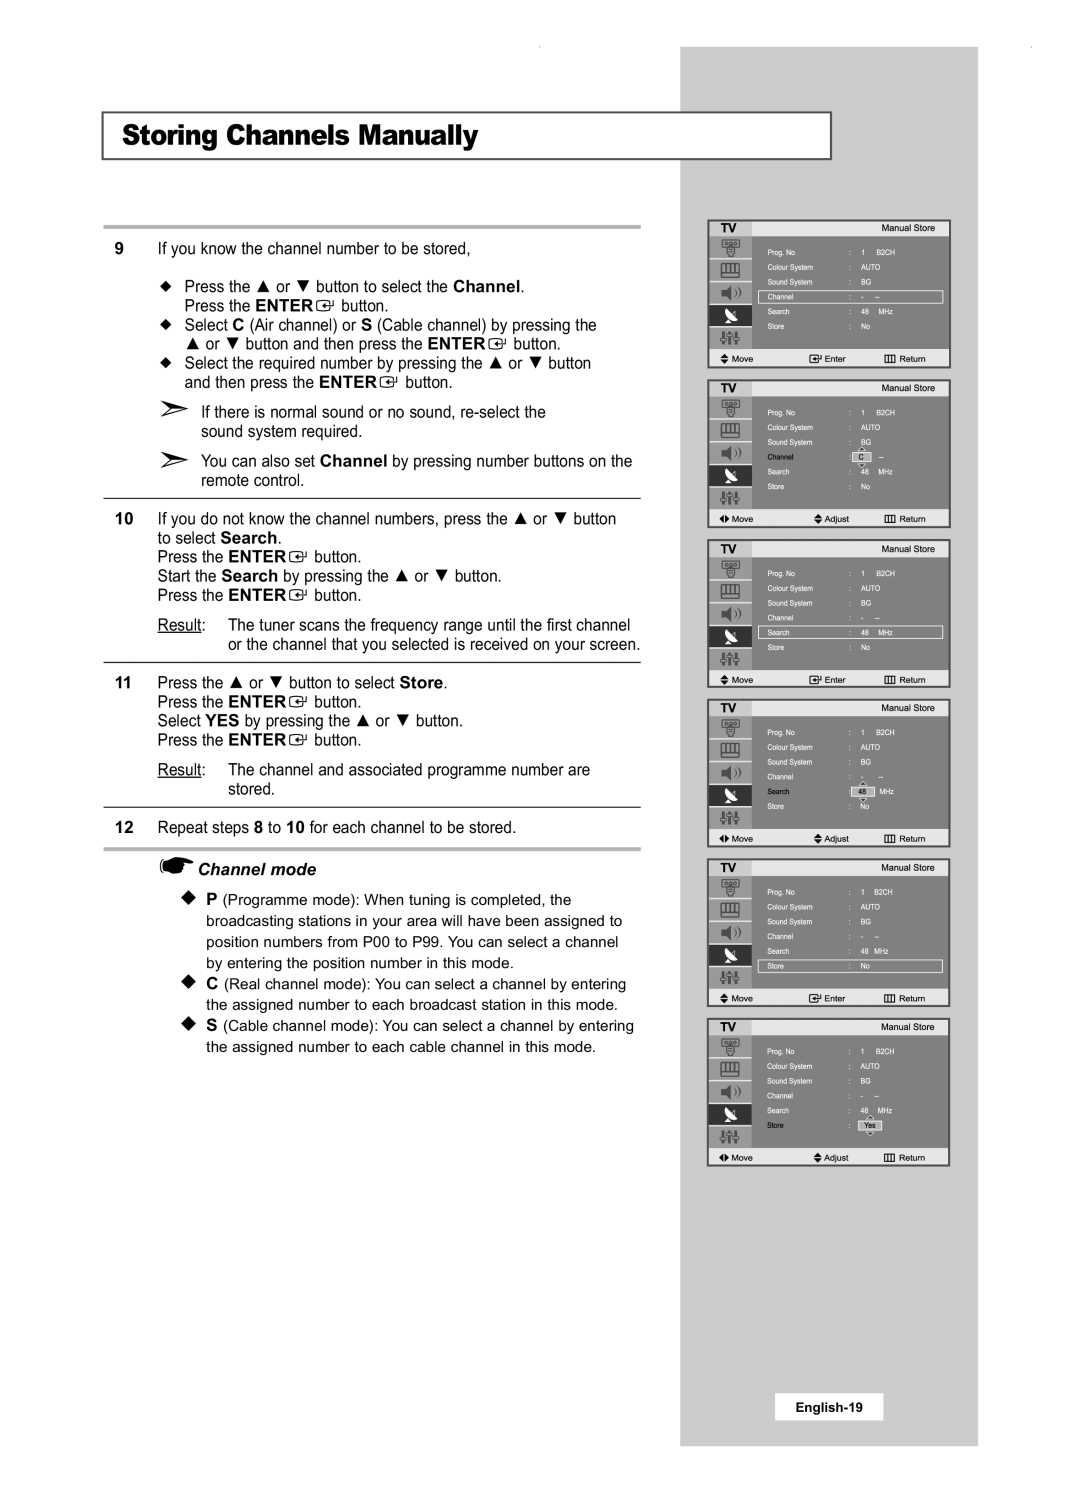 Samsung LA22N21B manual Channel mode, Storing Channels Manually, English-19 